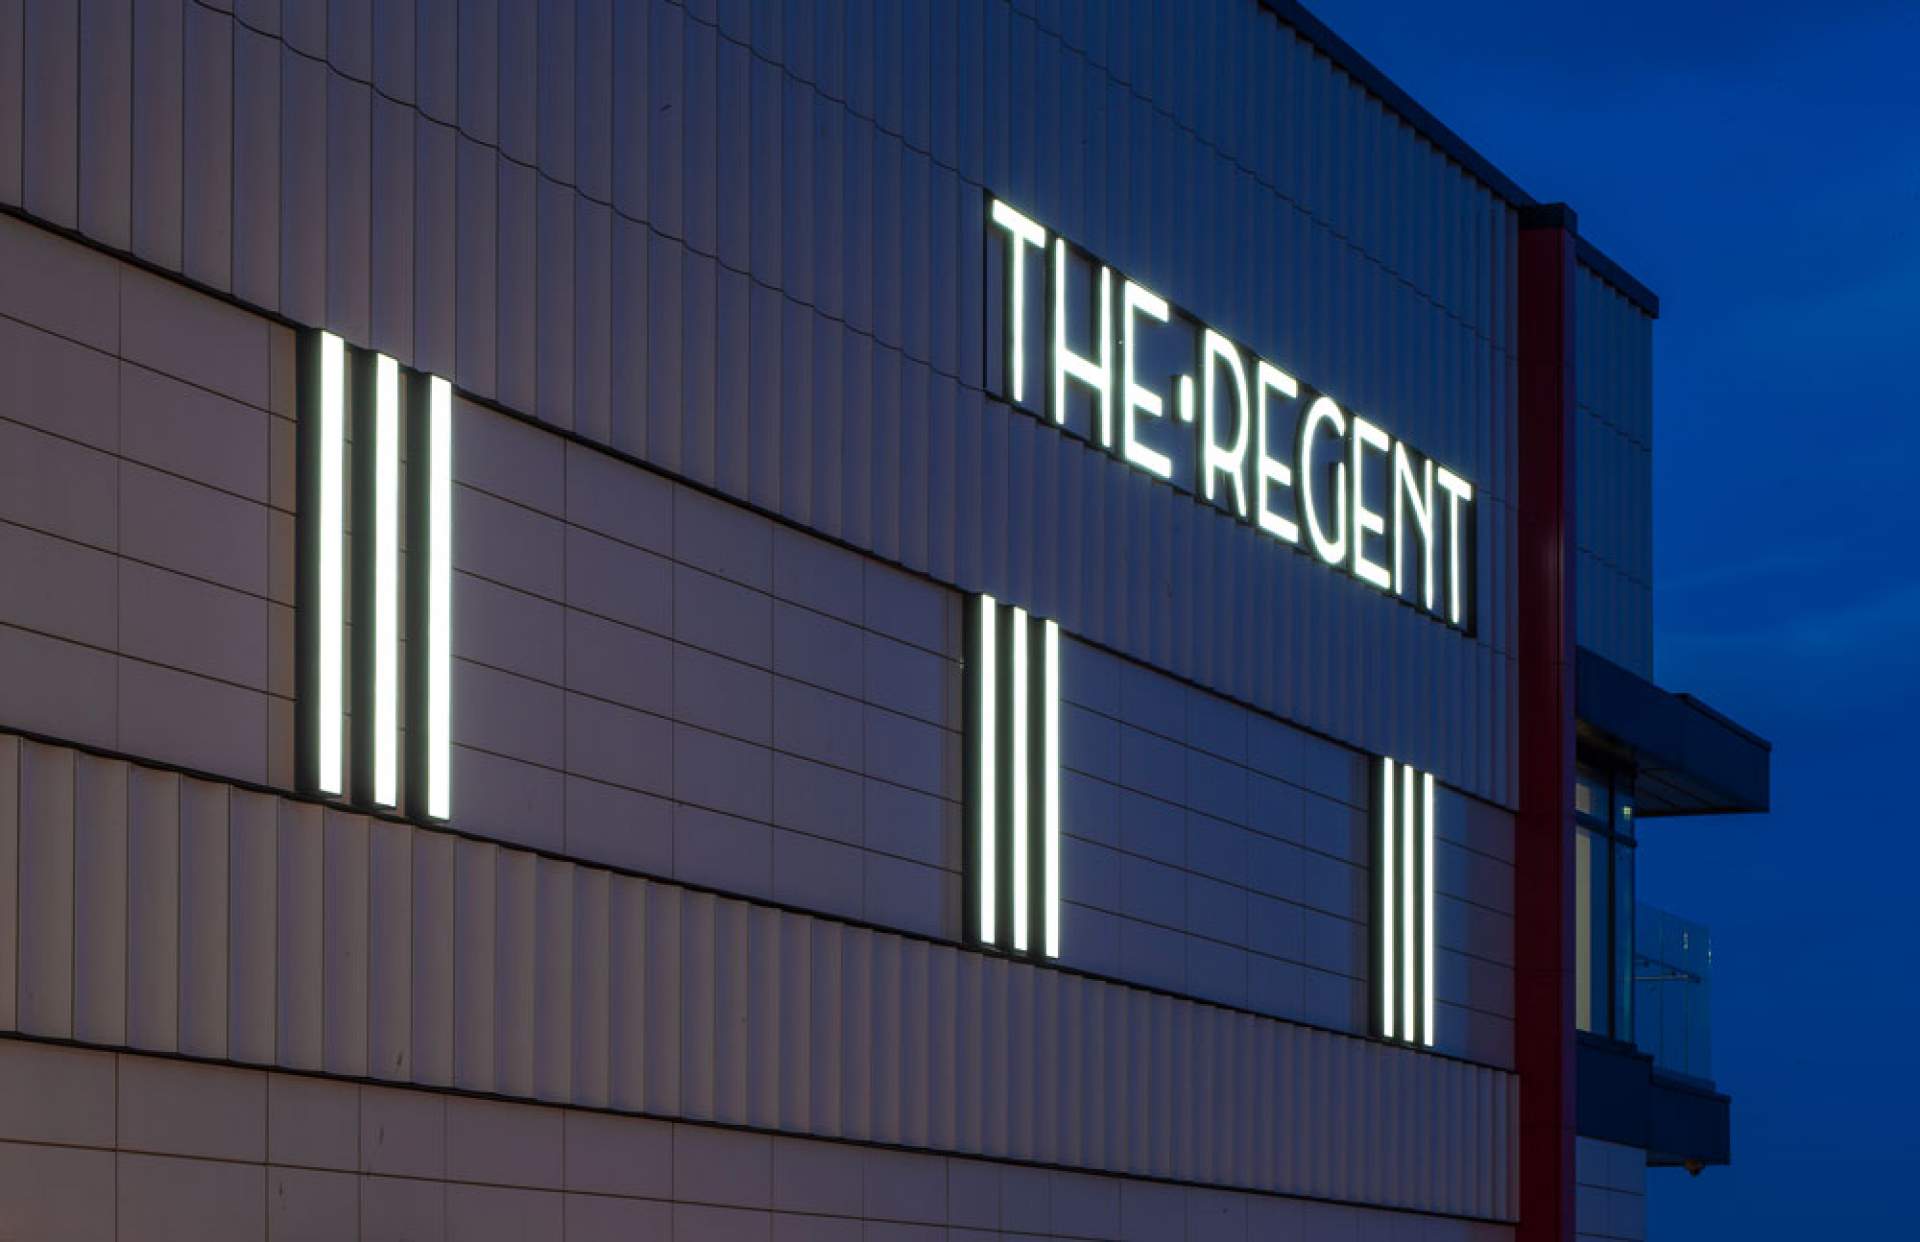 Regent Cinema 